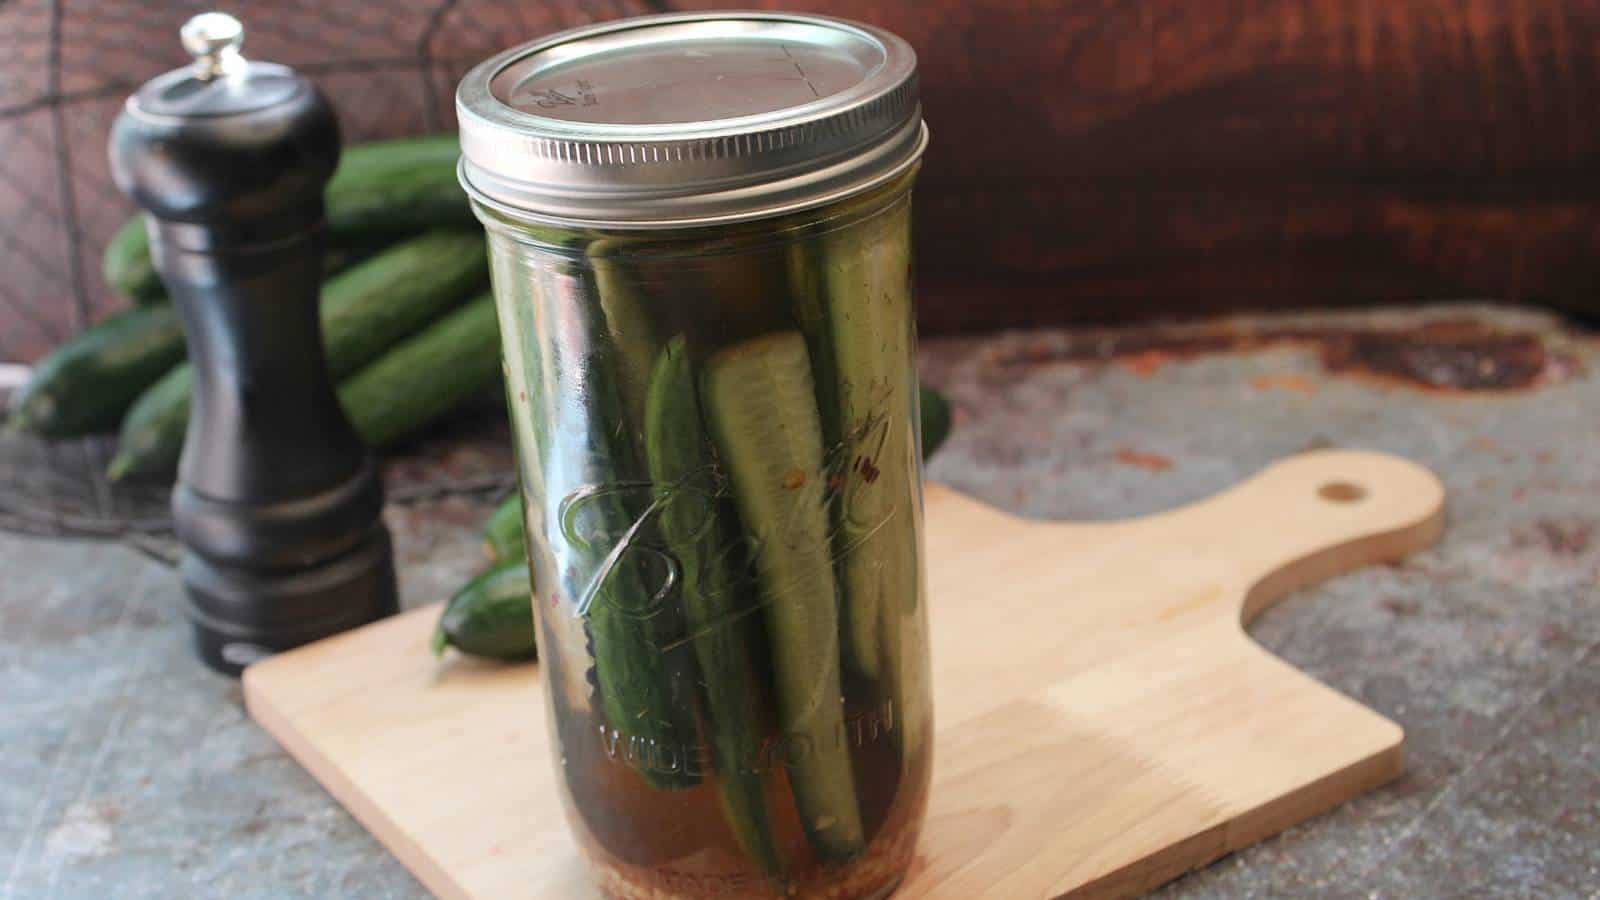 Homemade garlic dill pickles in a glass mason jar.